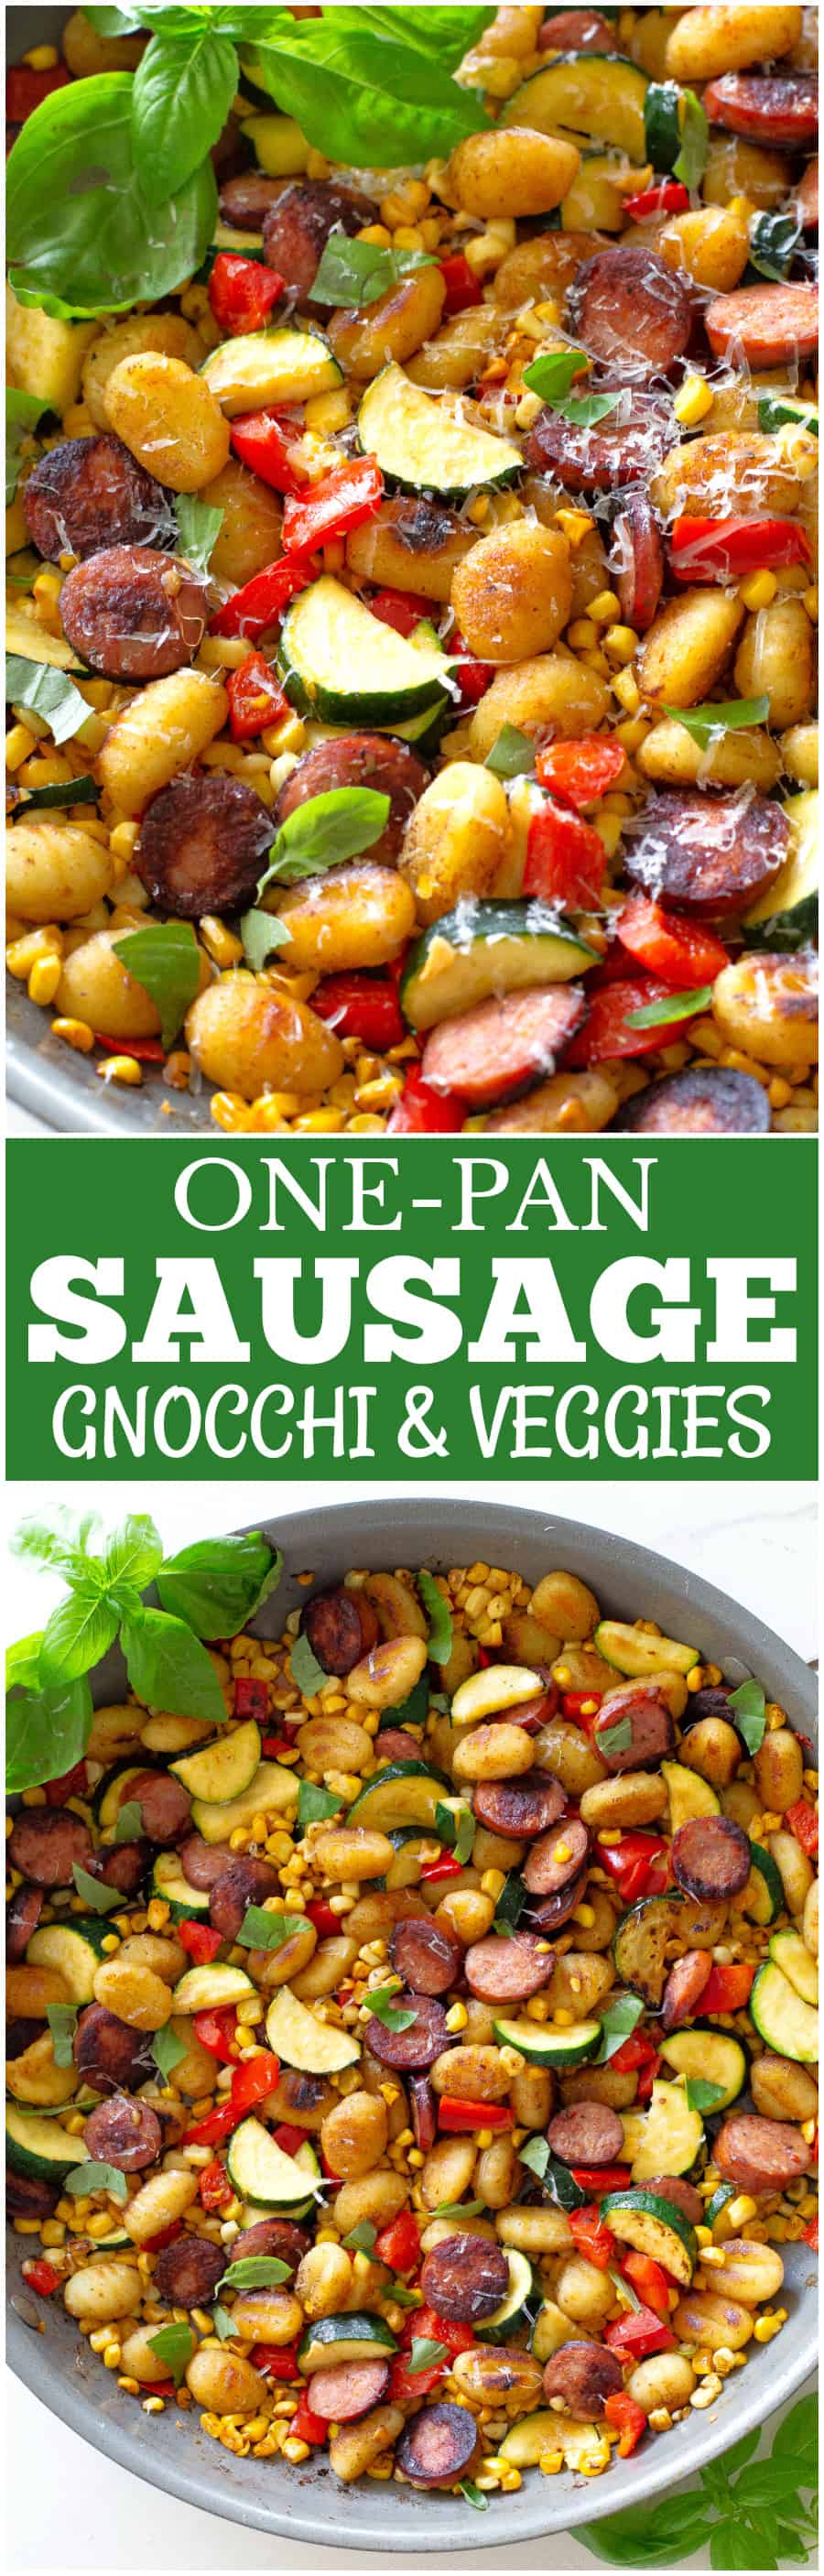 Nhoque de Salsicha One-Pan e Legumes 